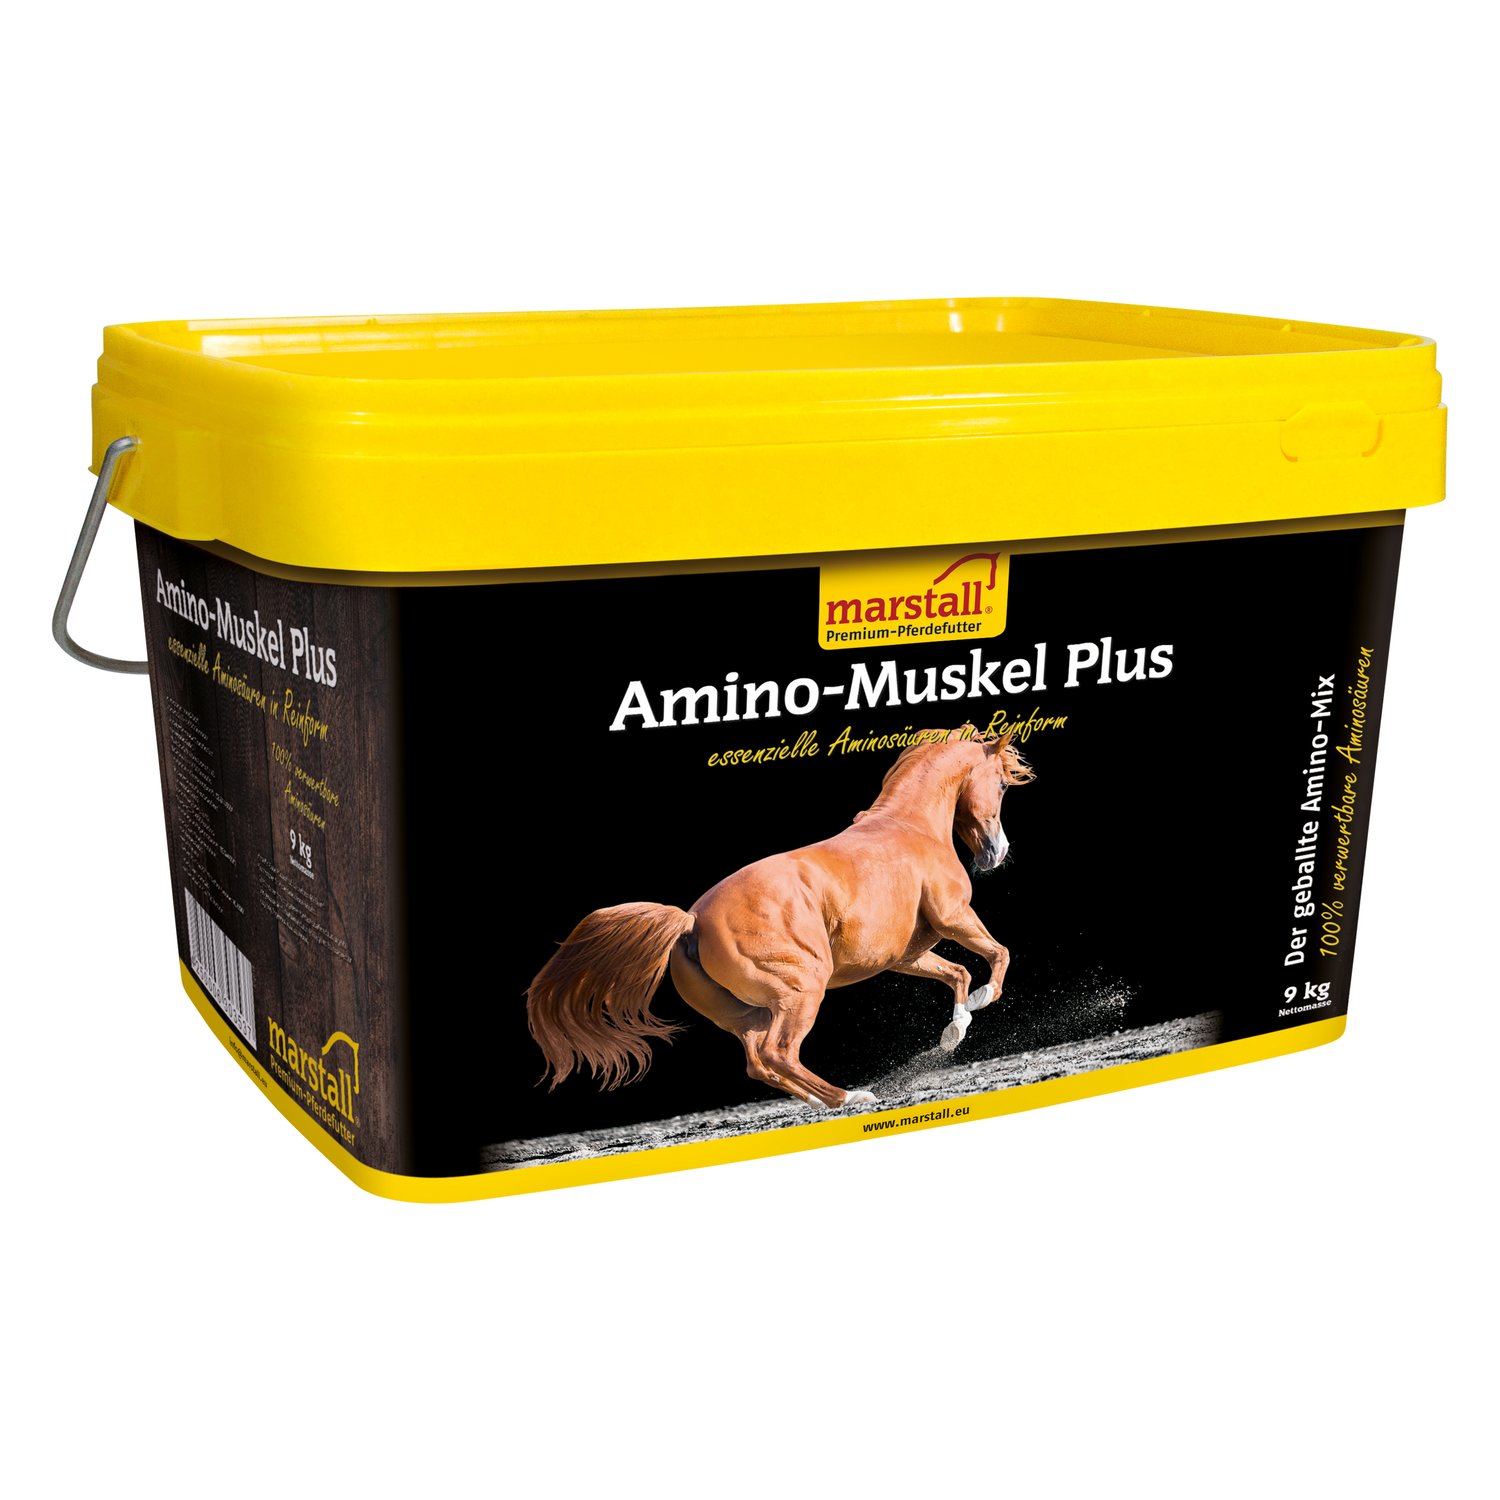 marstall Amino-Muskel Plus 9 kg